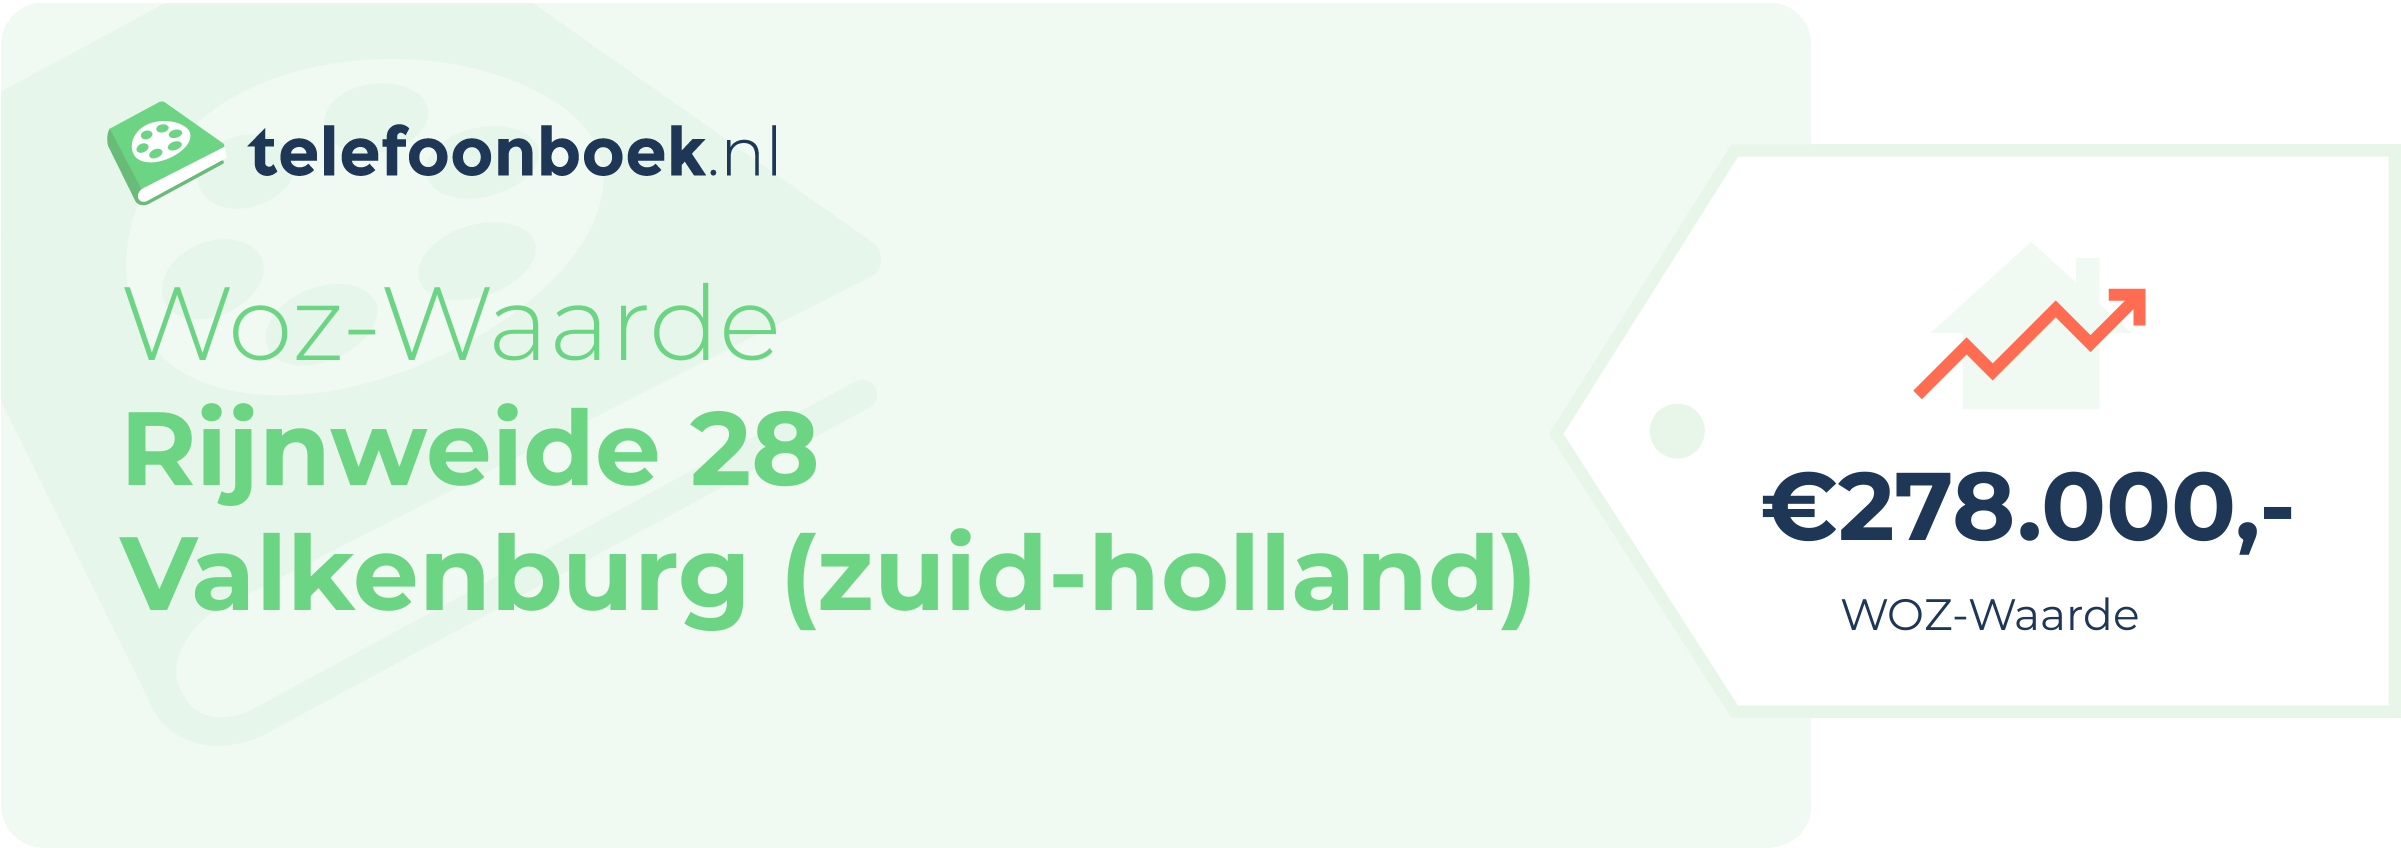 WOZ-waarde Rijnweide 28 Valkenburg (Zuid-Holland)